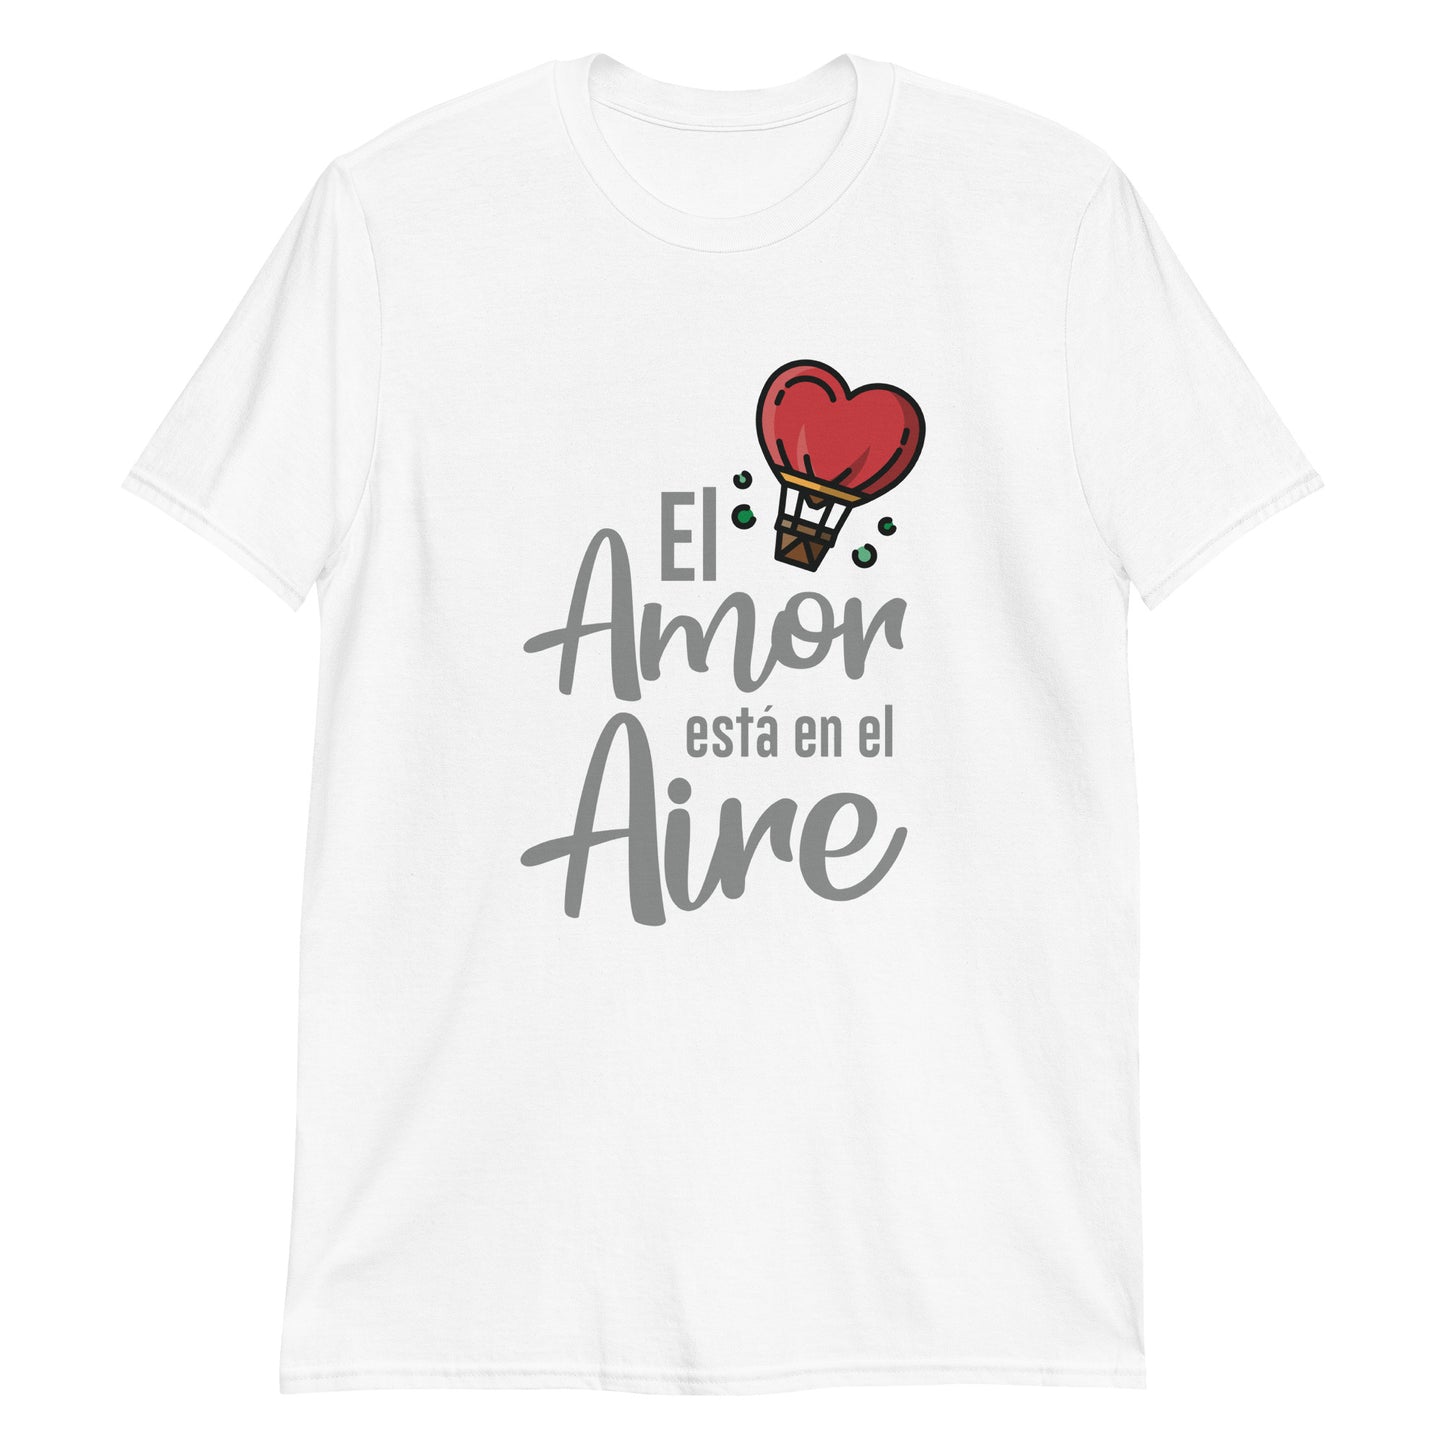 Love is in the air Anti-love T-shirt